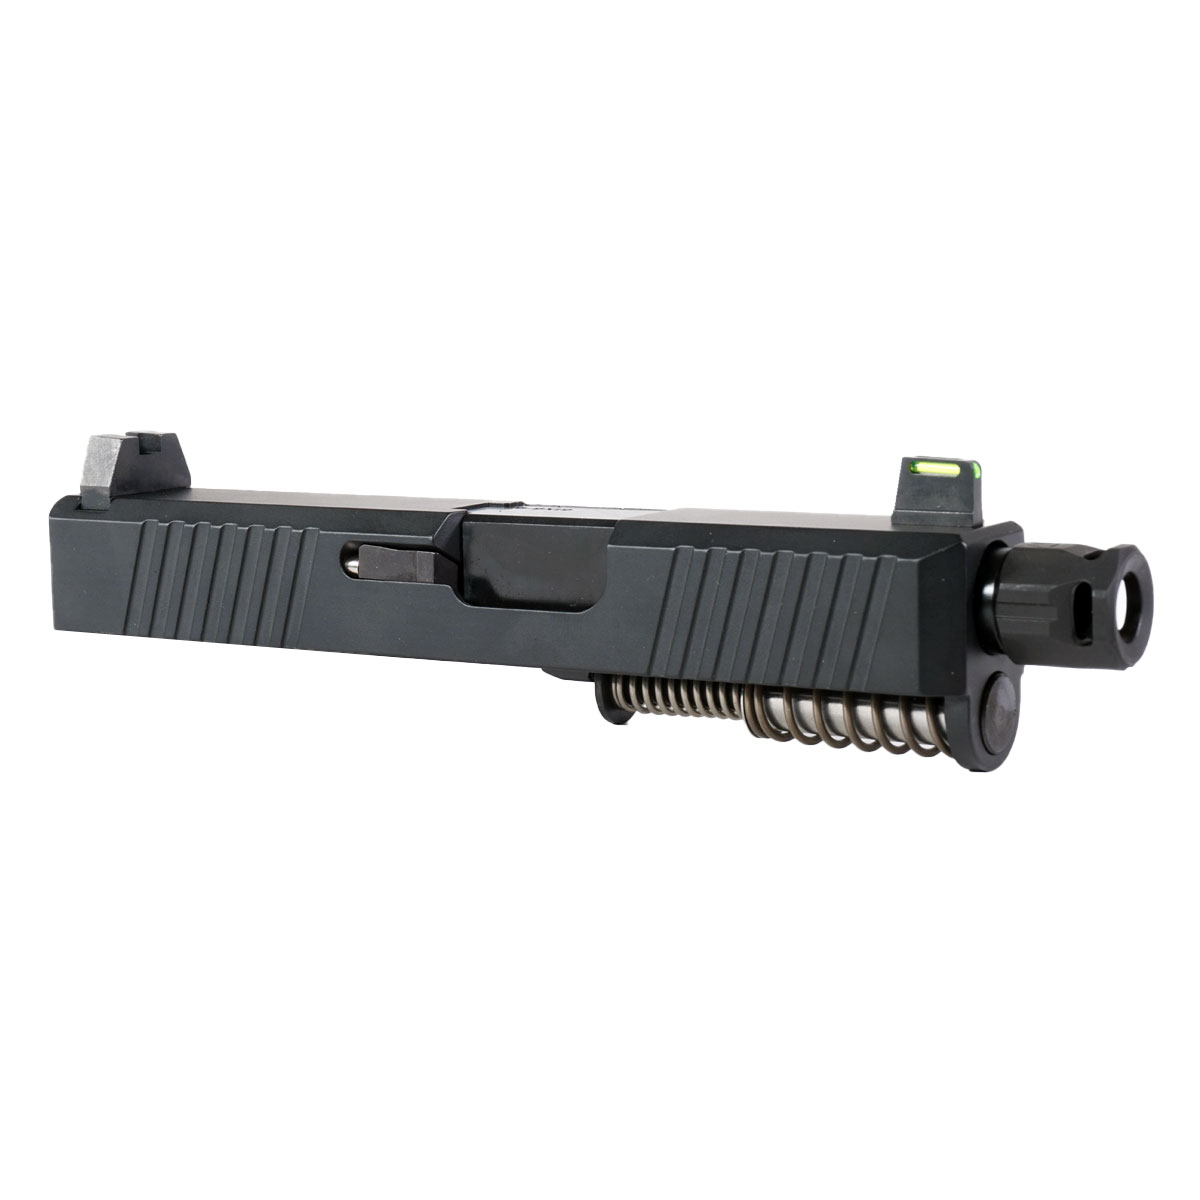 MMC 'Providence Power' 9mm Complete Slide Kit - Glock 26 Gen 1-3 Compatible